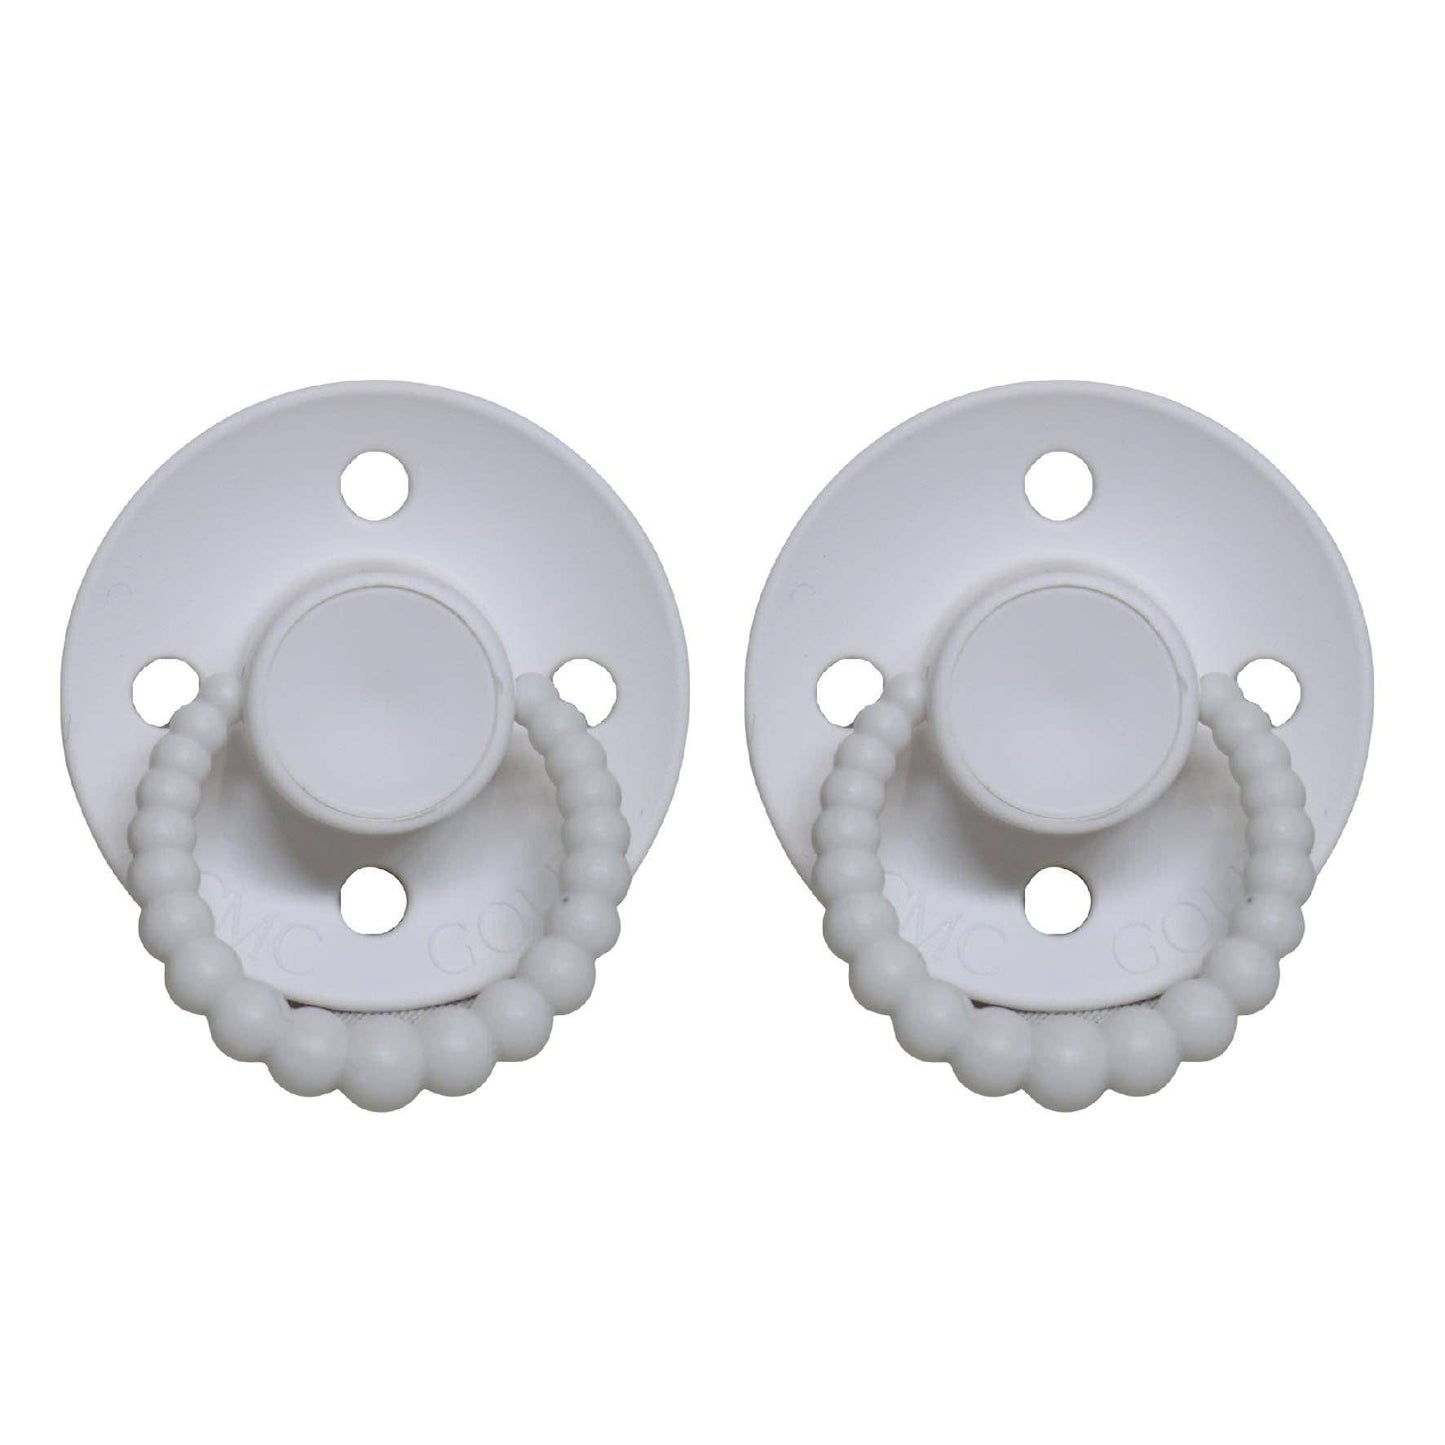 CMC Dummies White (Glow In The Dark handle): Size 3